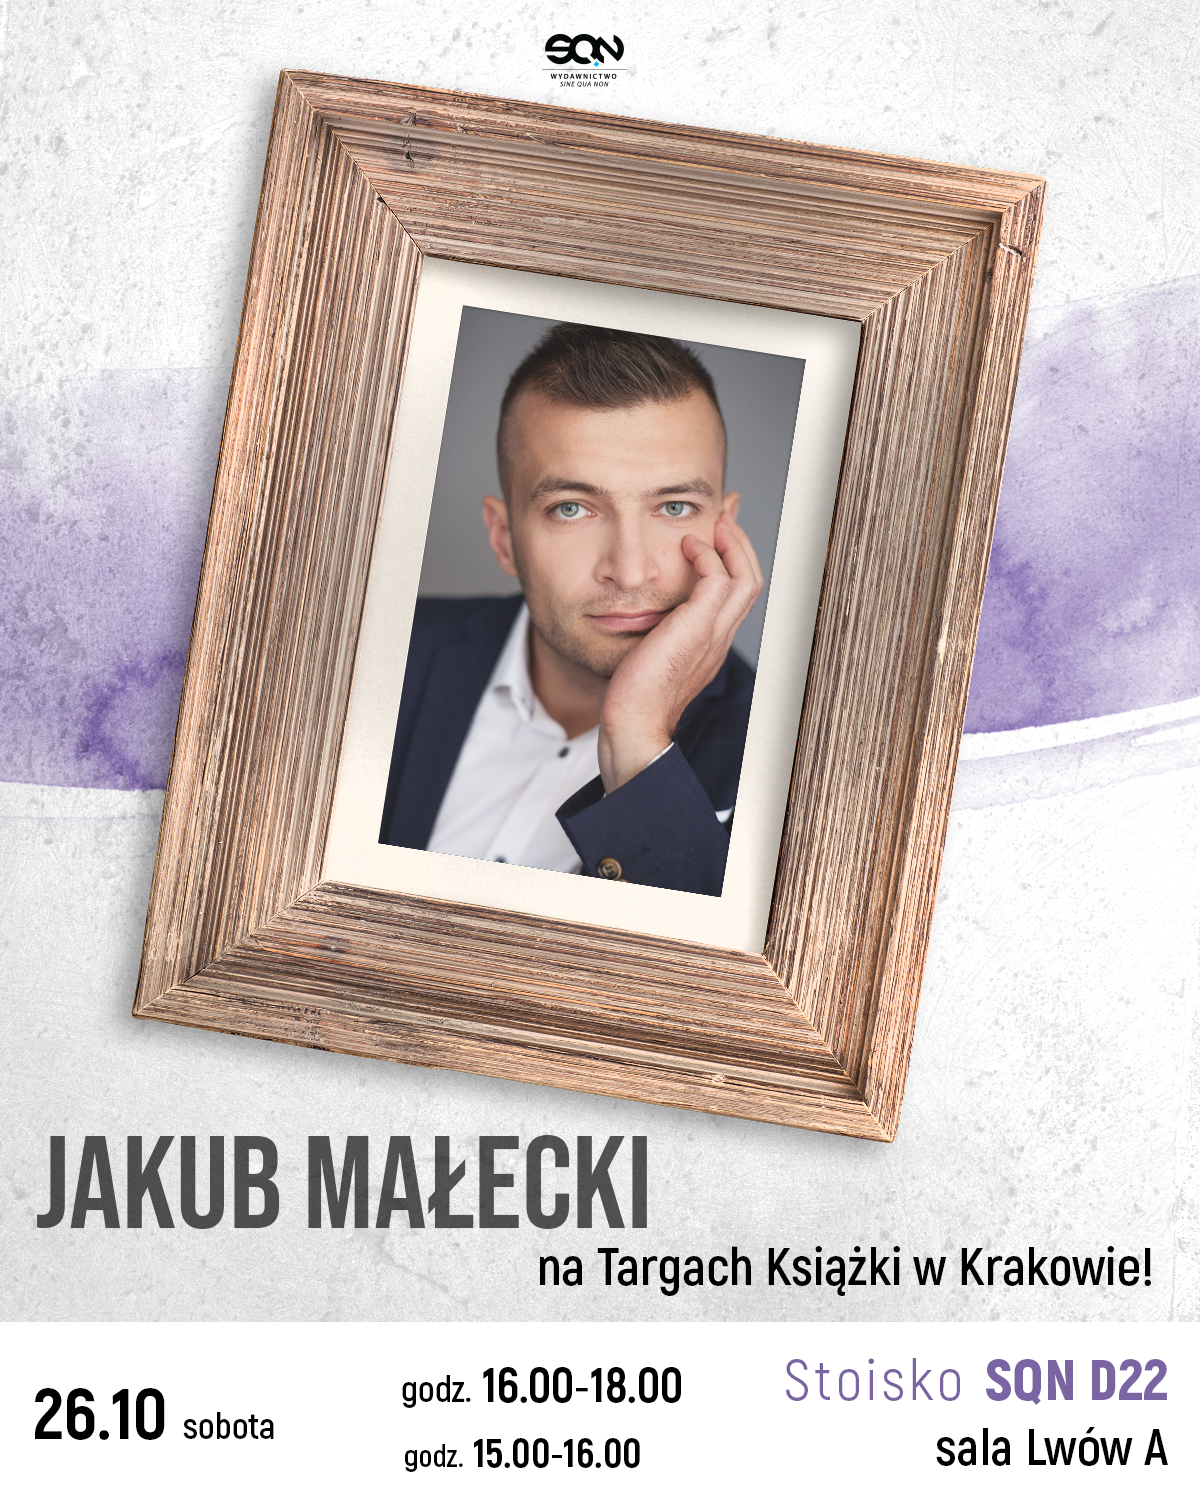 Jakub-Małecki_targi19_fb-post